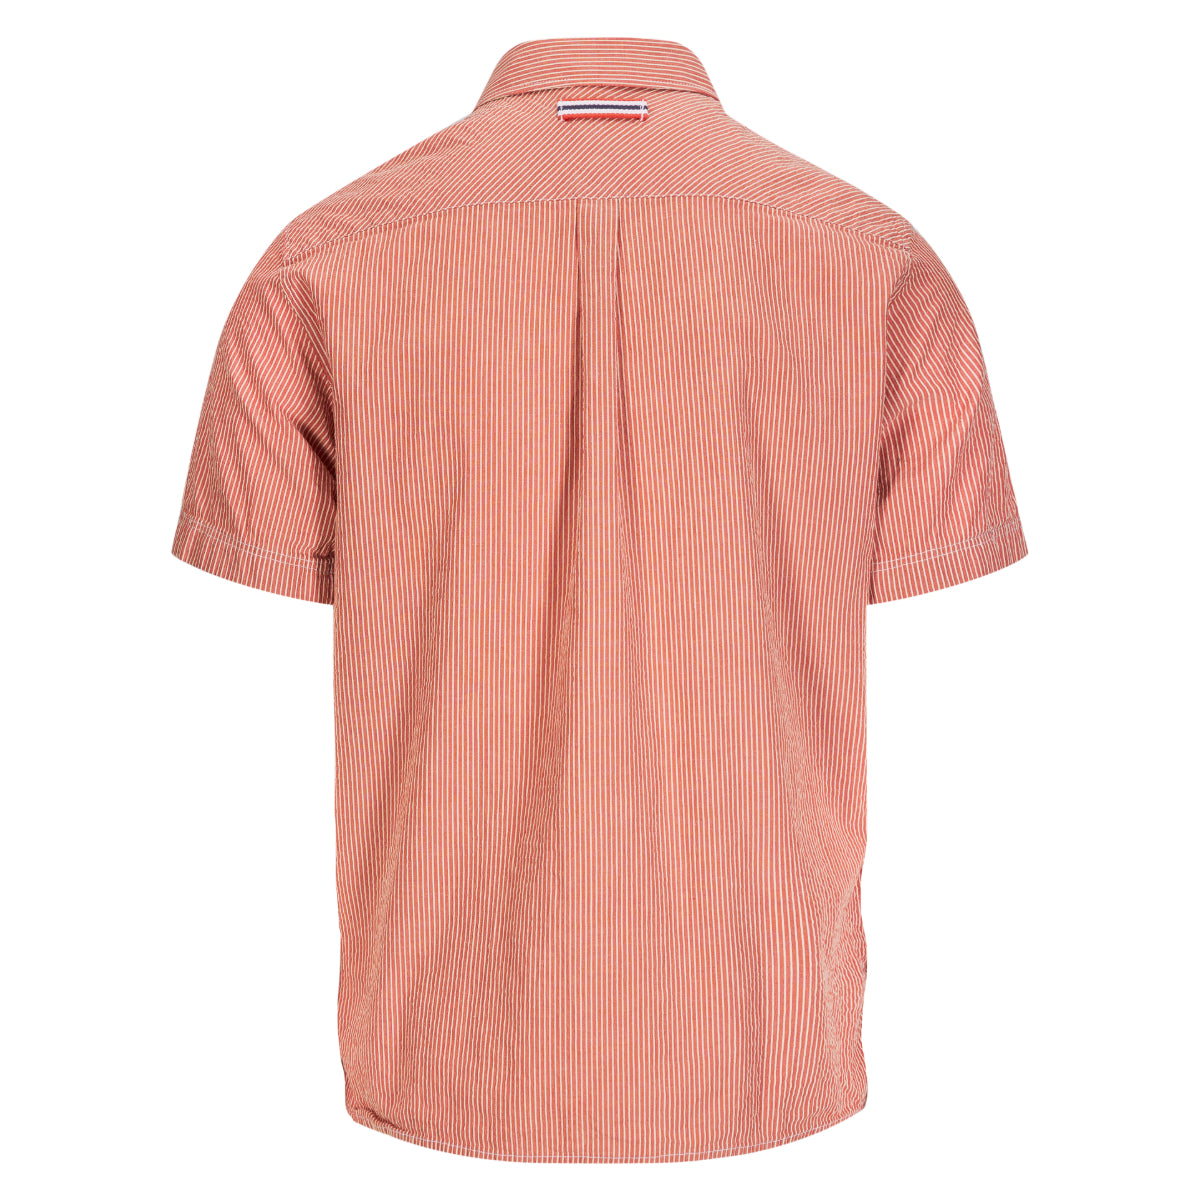 Amundsen Sports - Men's Beach Shirt - Pinstripe Weathered Red